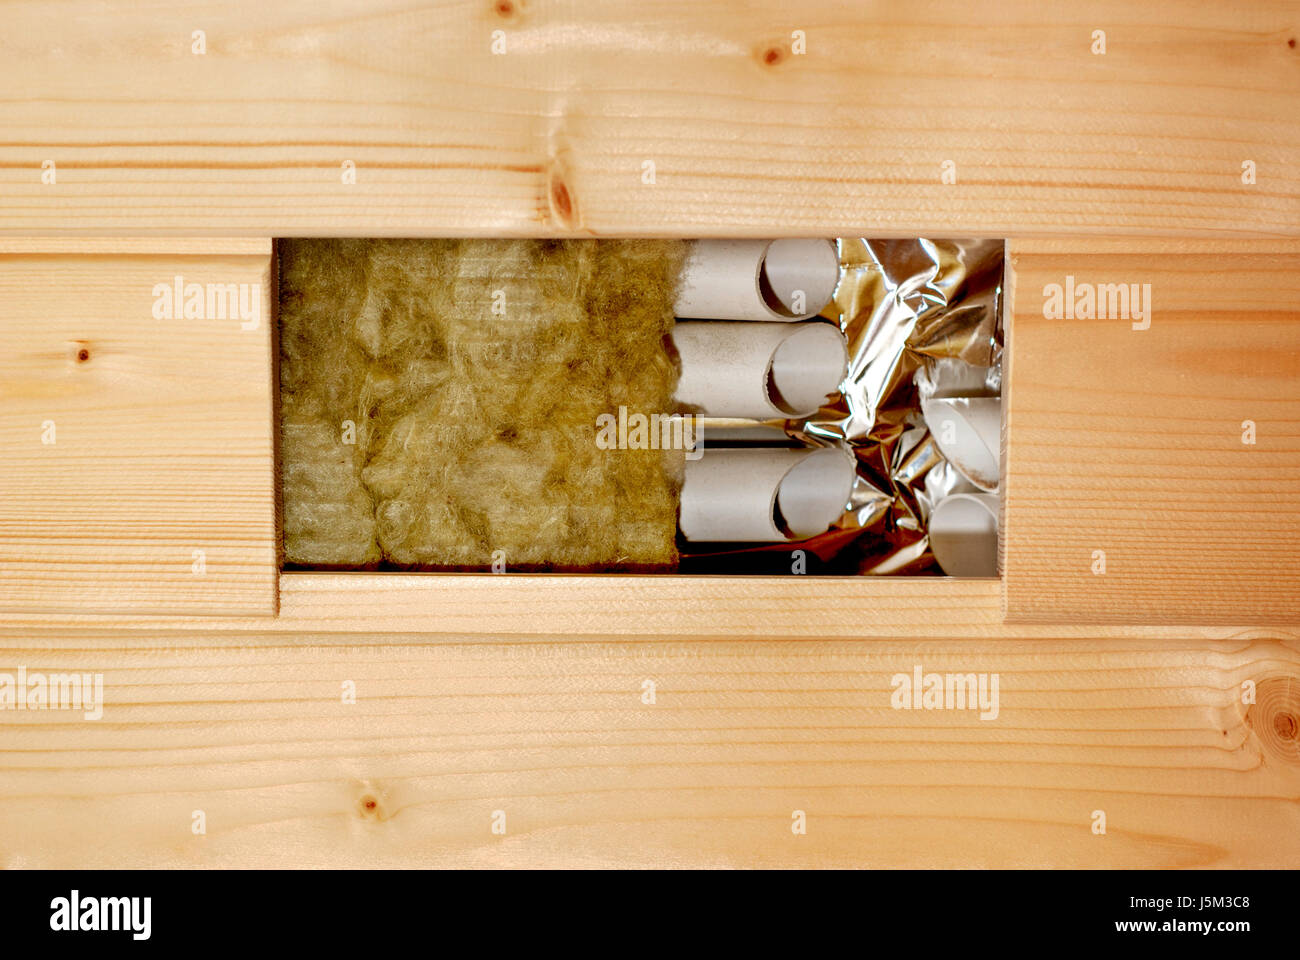 internal structure of sauna elements Stock Photo